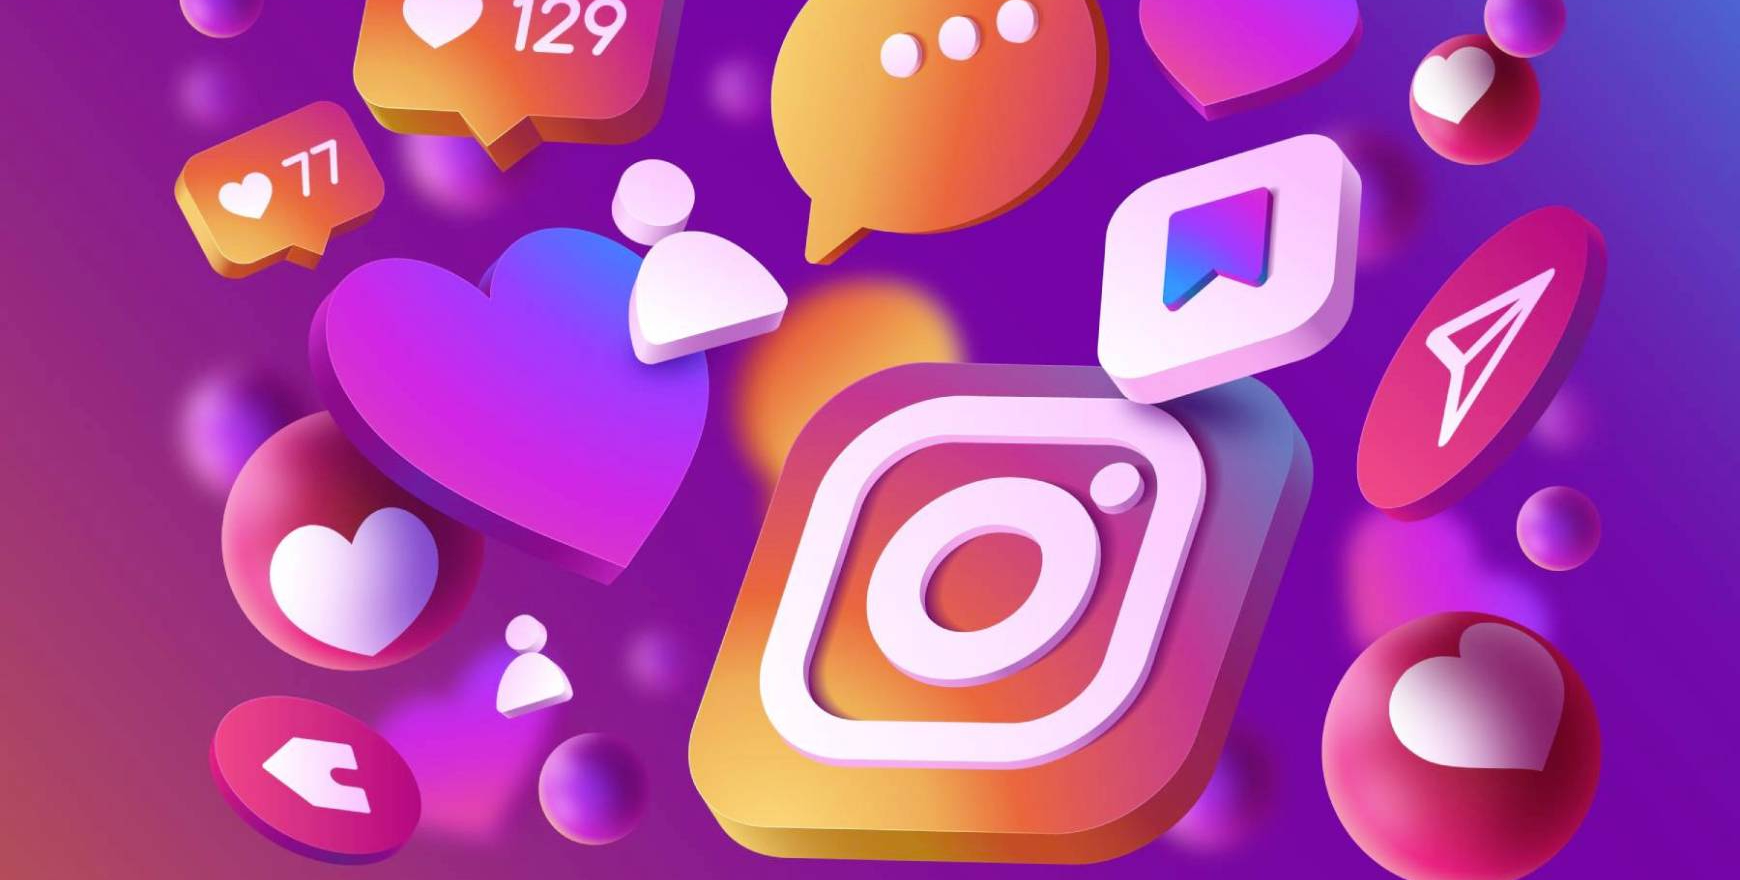 What is the best way to integrate Instagram into a Joomla 4 website?